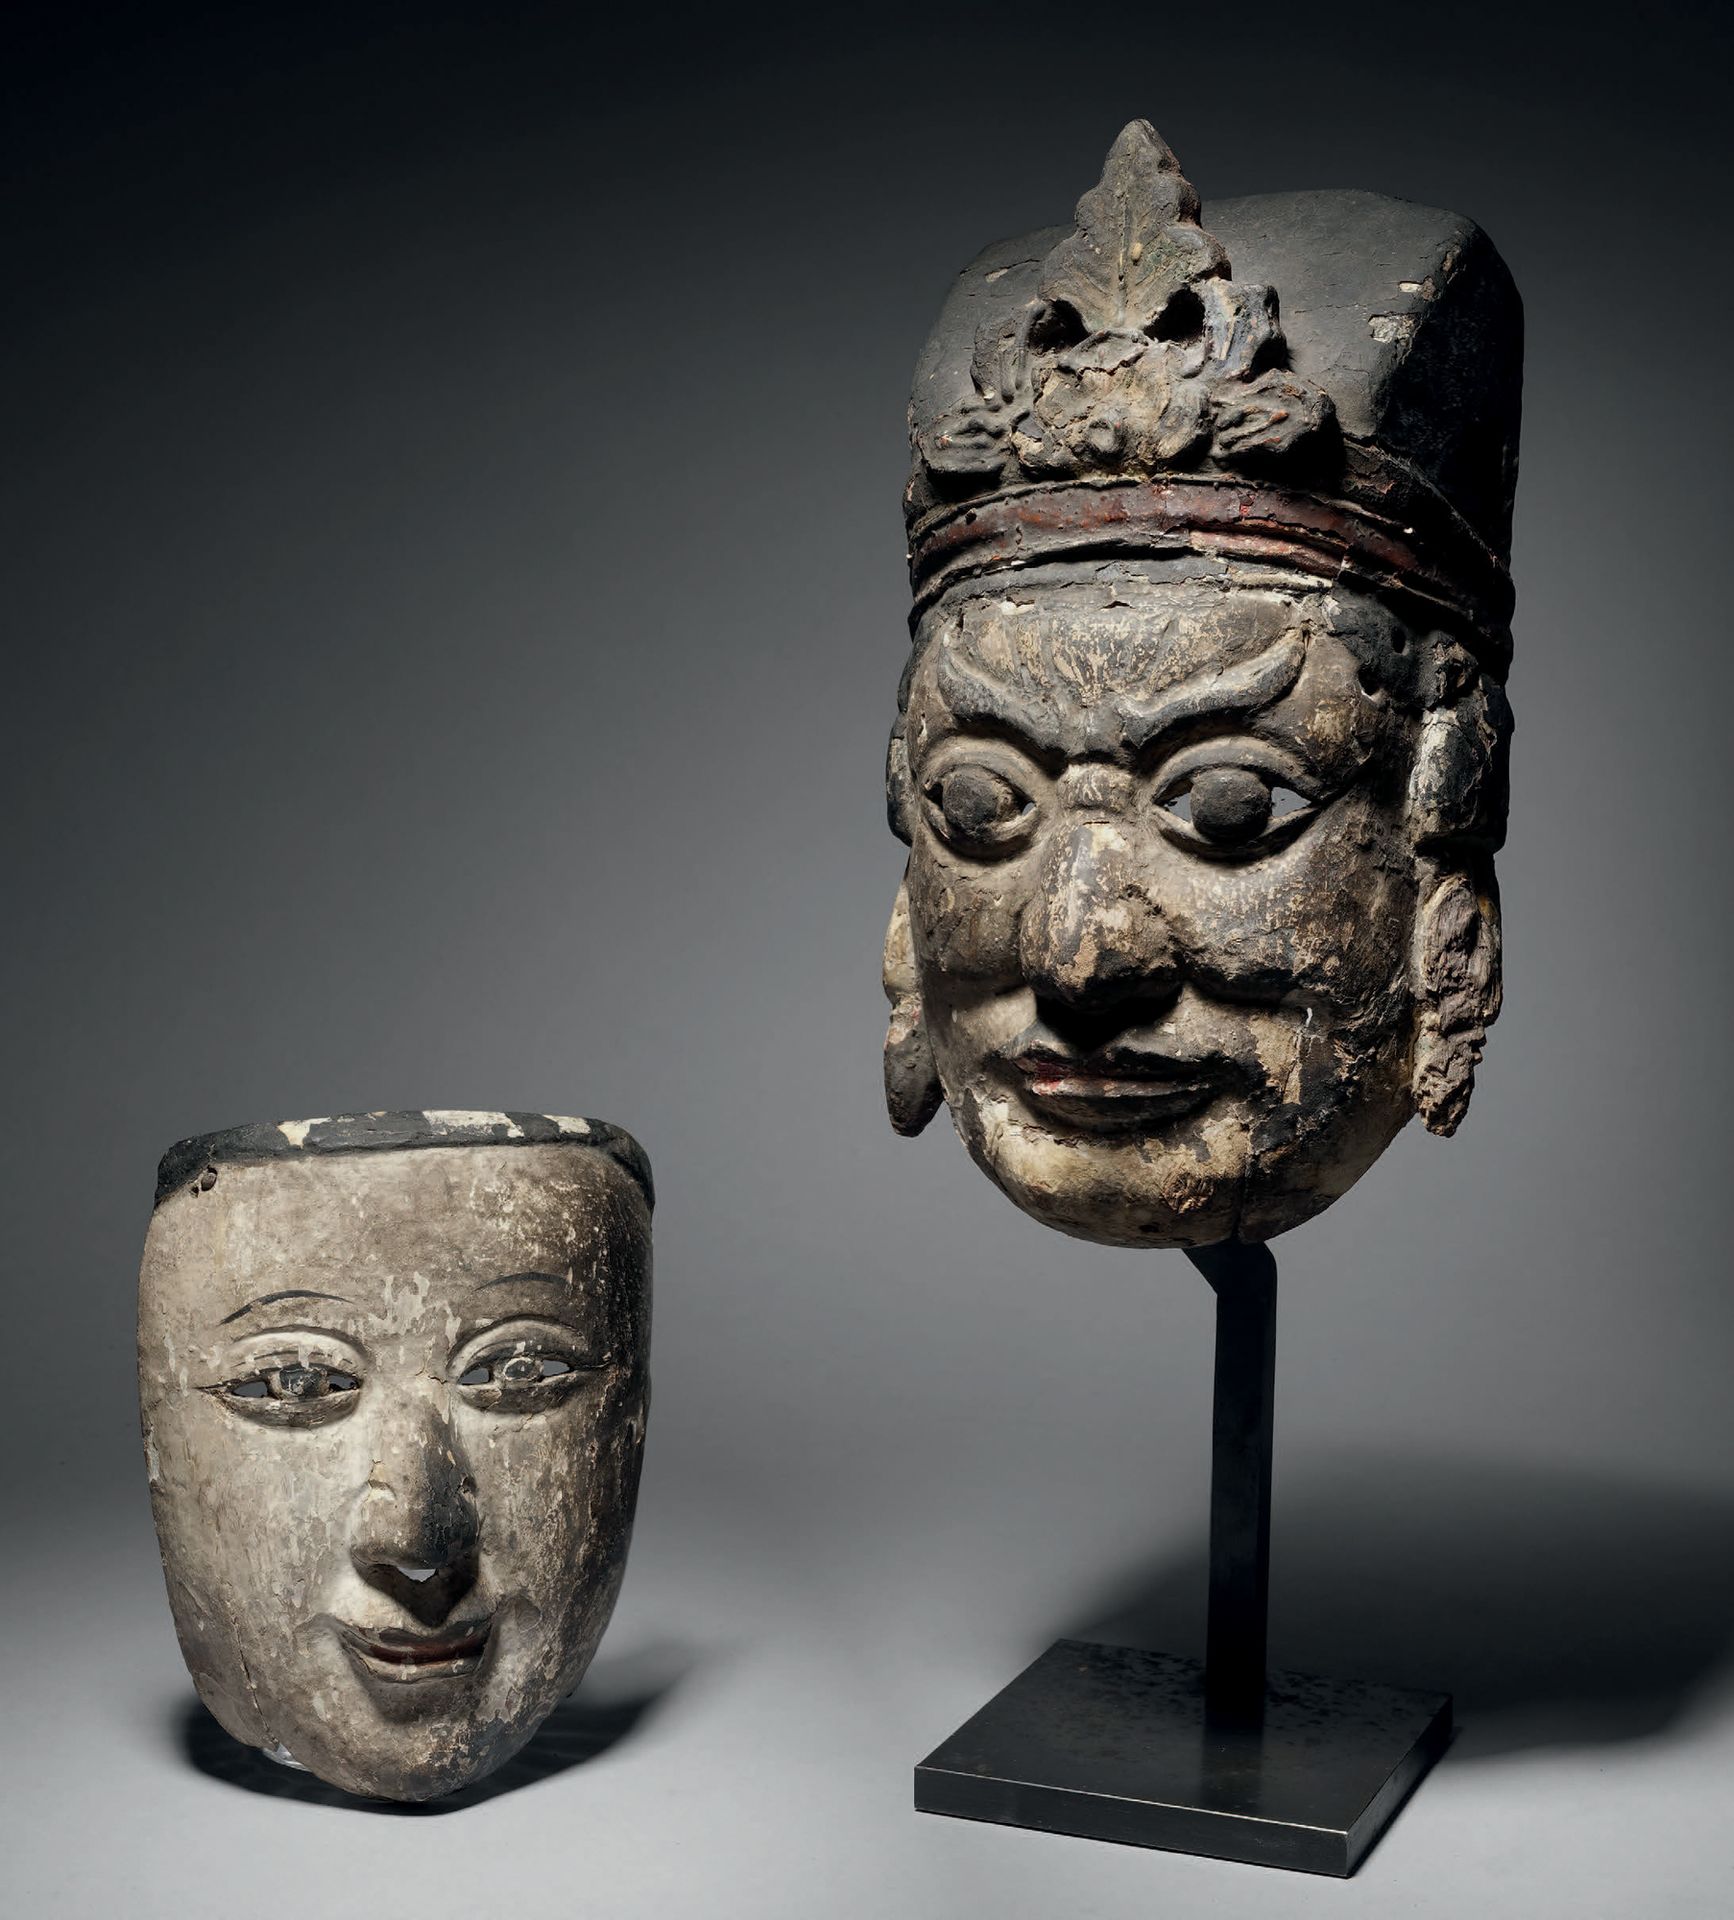 Null Doppelmaske aus dem Nuo-Theater, Guizhou, China.
H. 24 cm - H. 15 cm. Polyc&hellip;